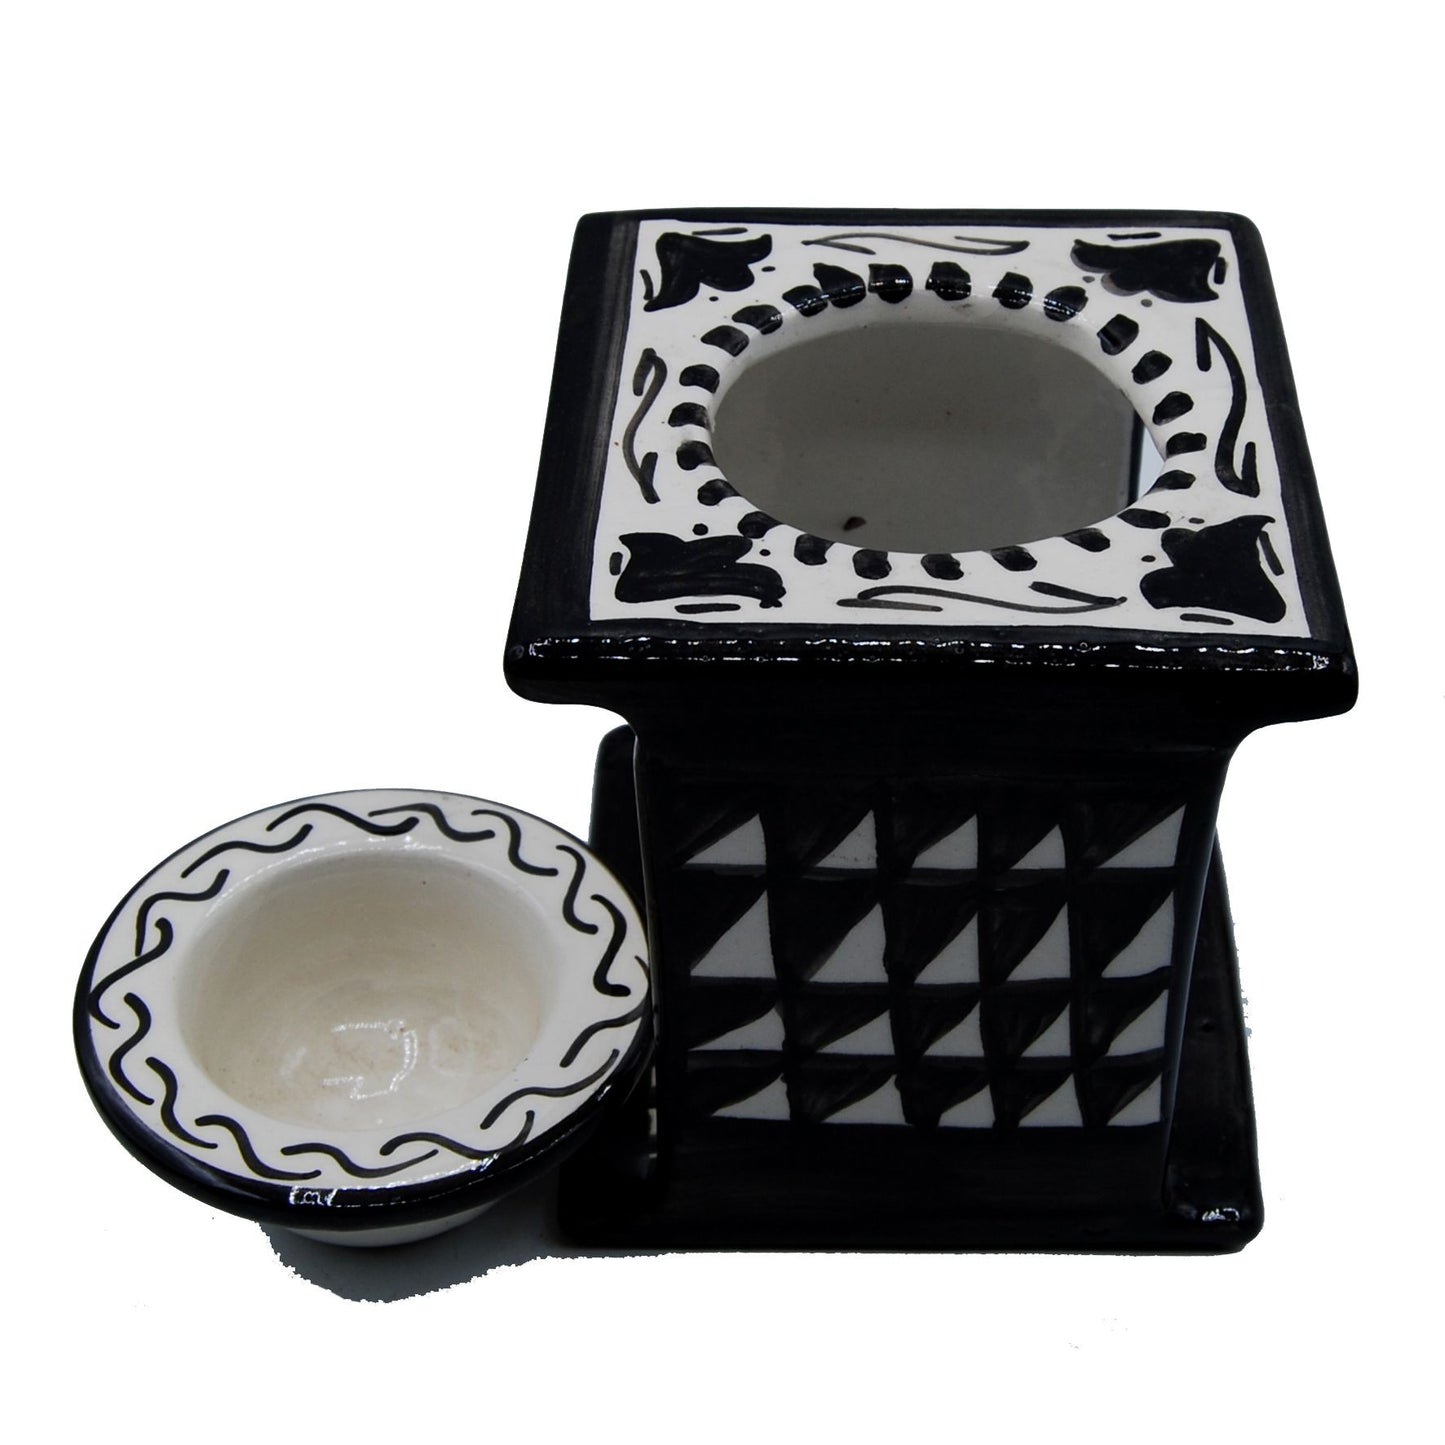 Arredamento Etnico Profumatore Ceramica Terre Cuite Marocco 1103201117